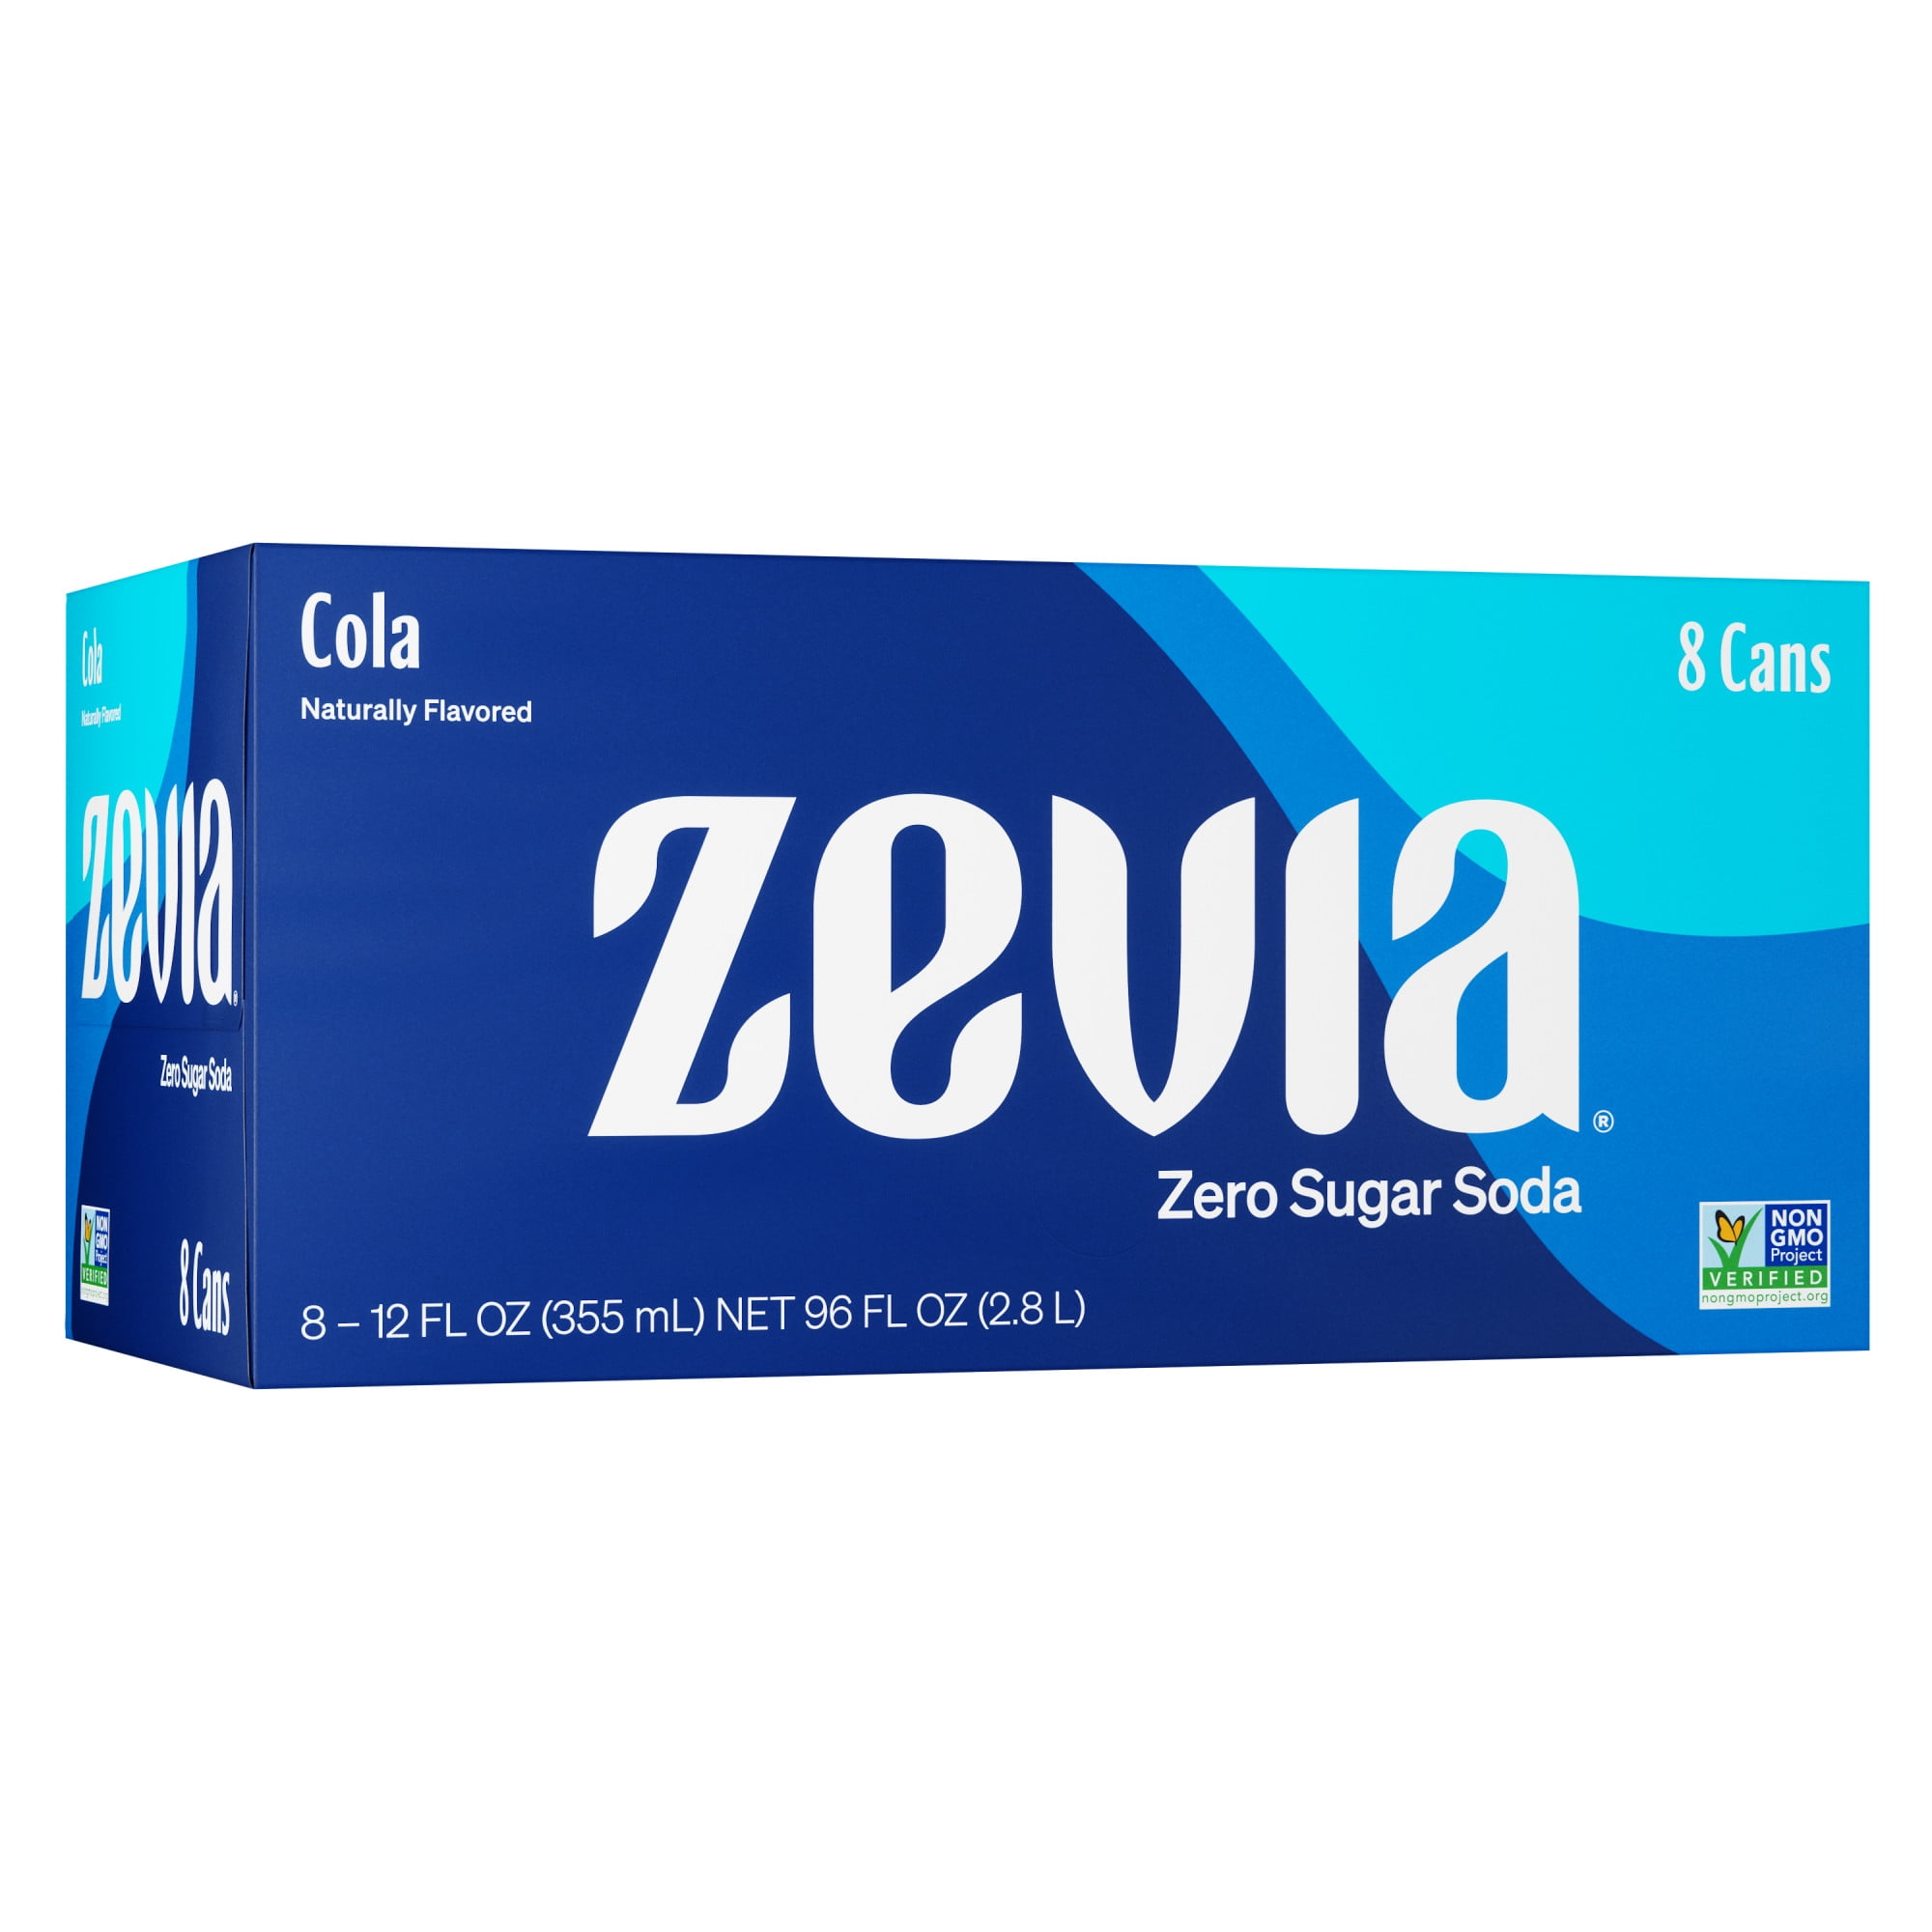 Zevia Zero Sugar, 0 Calorie Cola Soda Pop, 12 fl oz, 8 Pack Cans